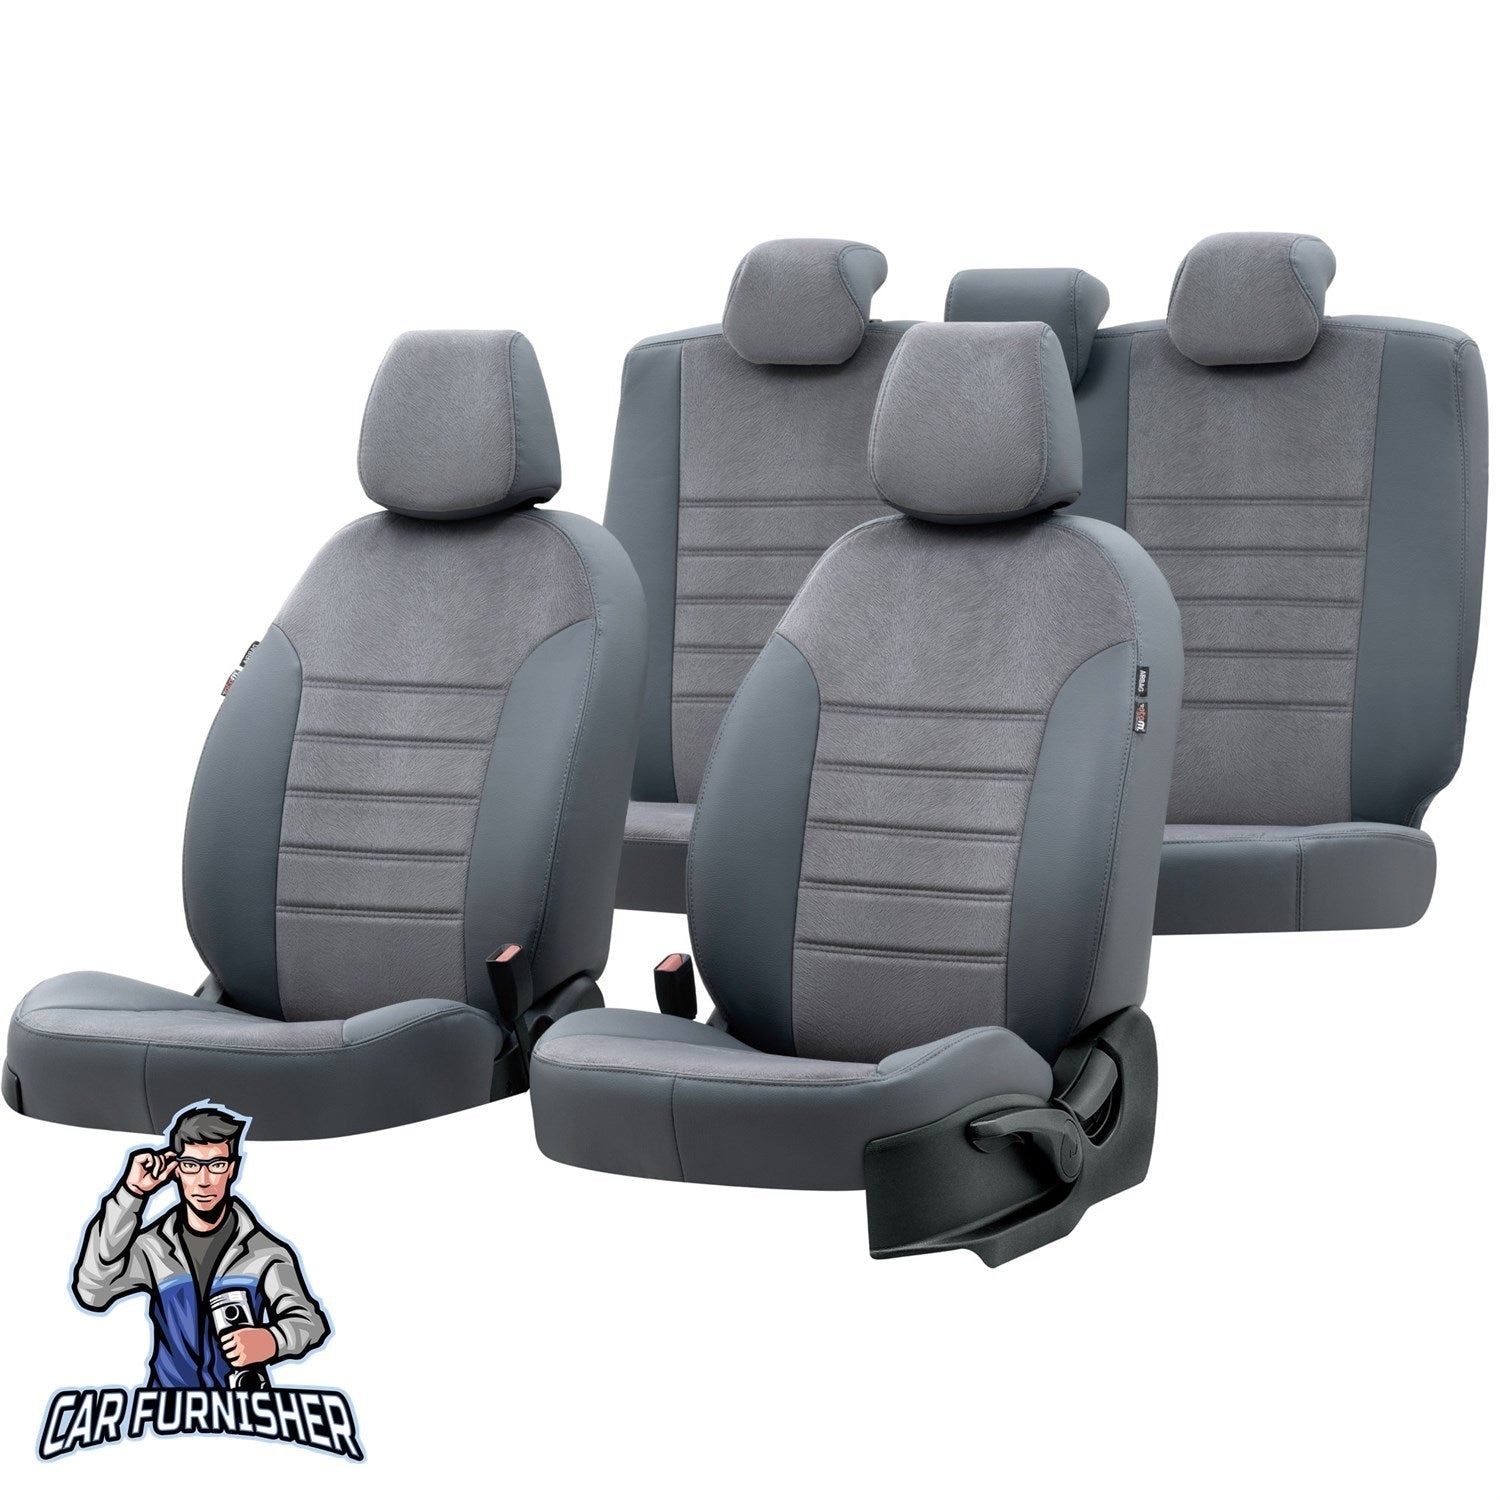 Bmw X5 Car Seat Cover 2000-2006 E53 Custom London Design Smoked Full Set (5 Seats + Handrest) Leather & Fabric